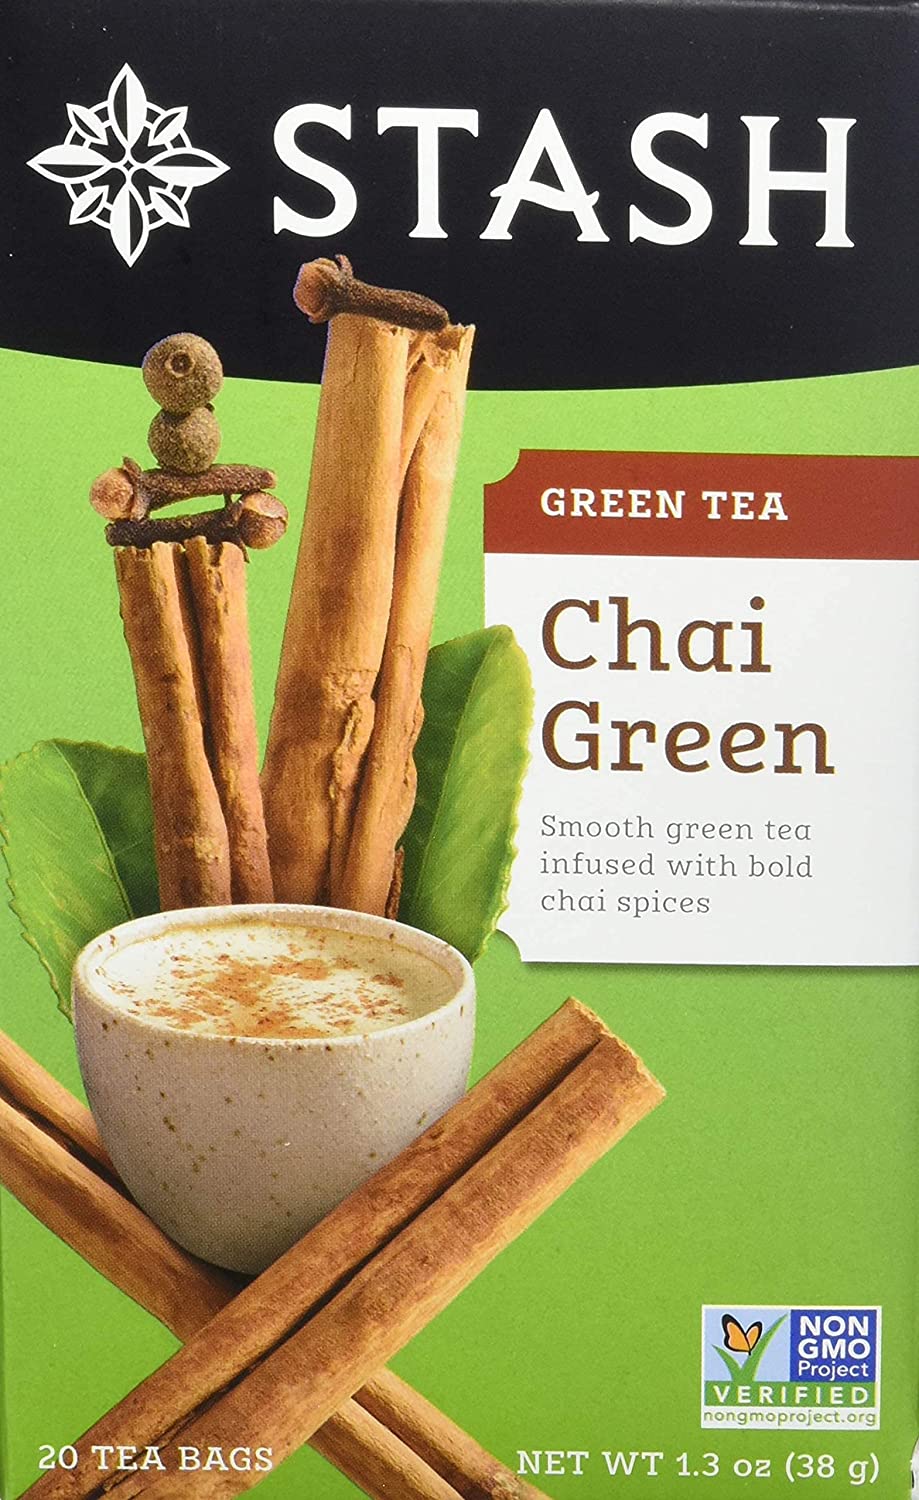 Stash Tea Green Chai Flavored Tea Bags - 20 Count